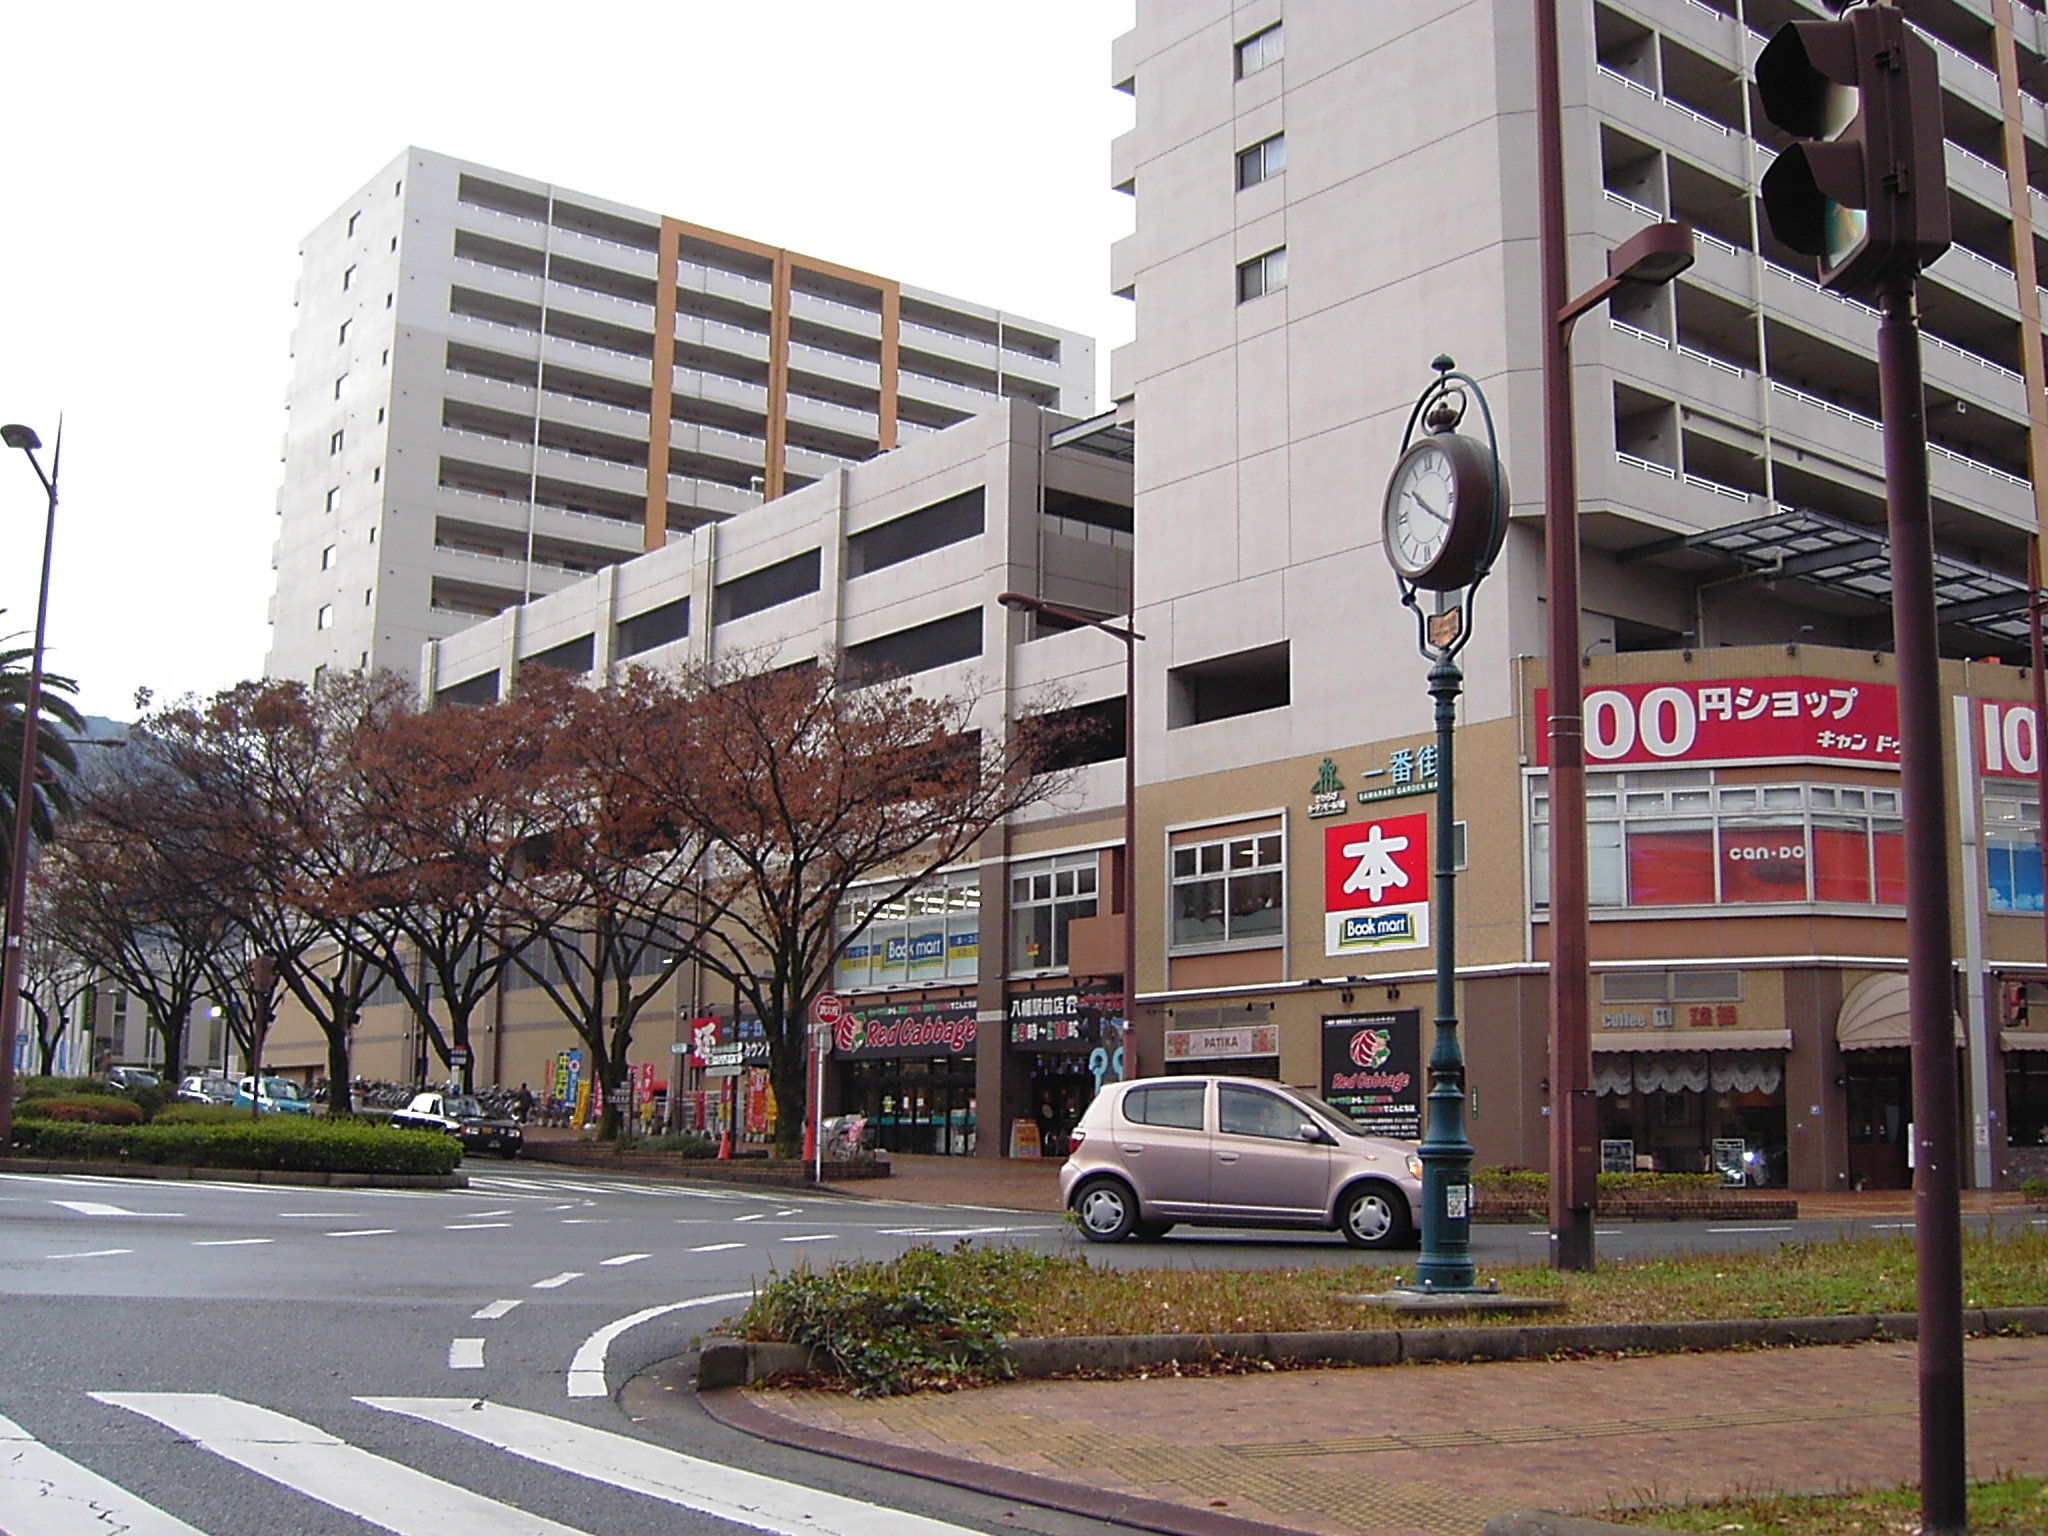 Shopping centre. Sawarabi Garden Mall Hachiman Ichibangai (shopping center) to 400m